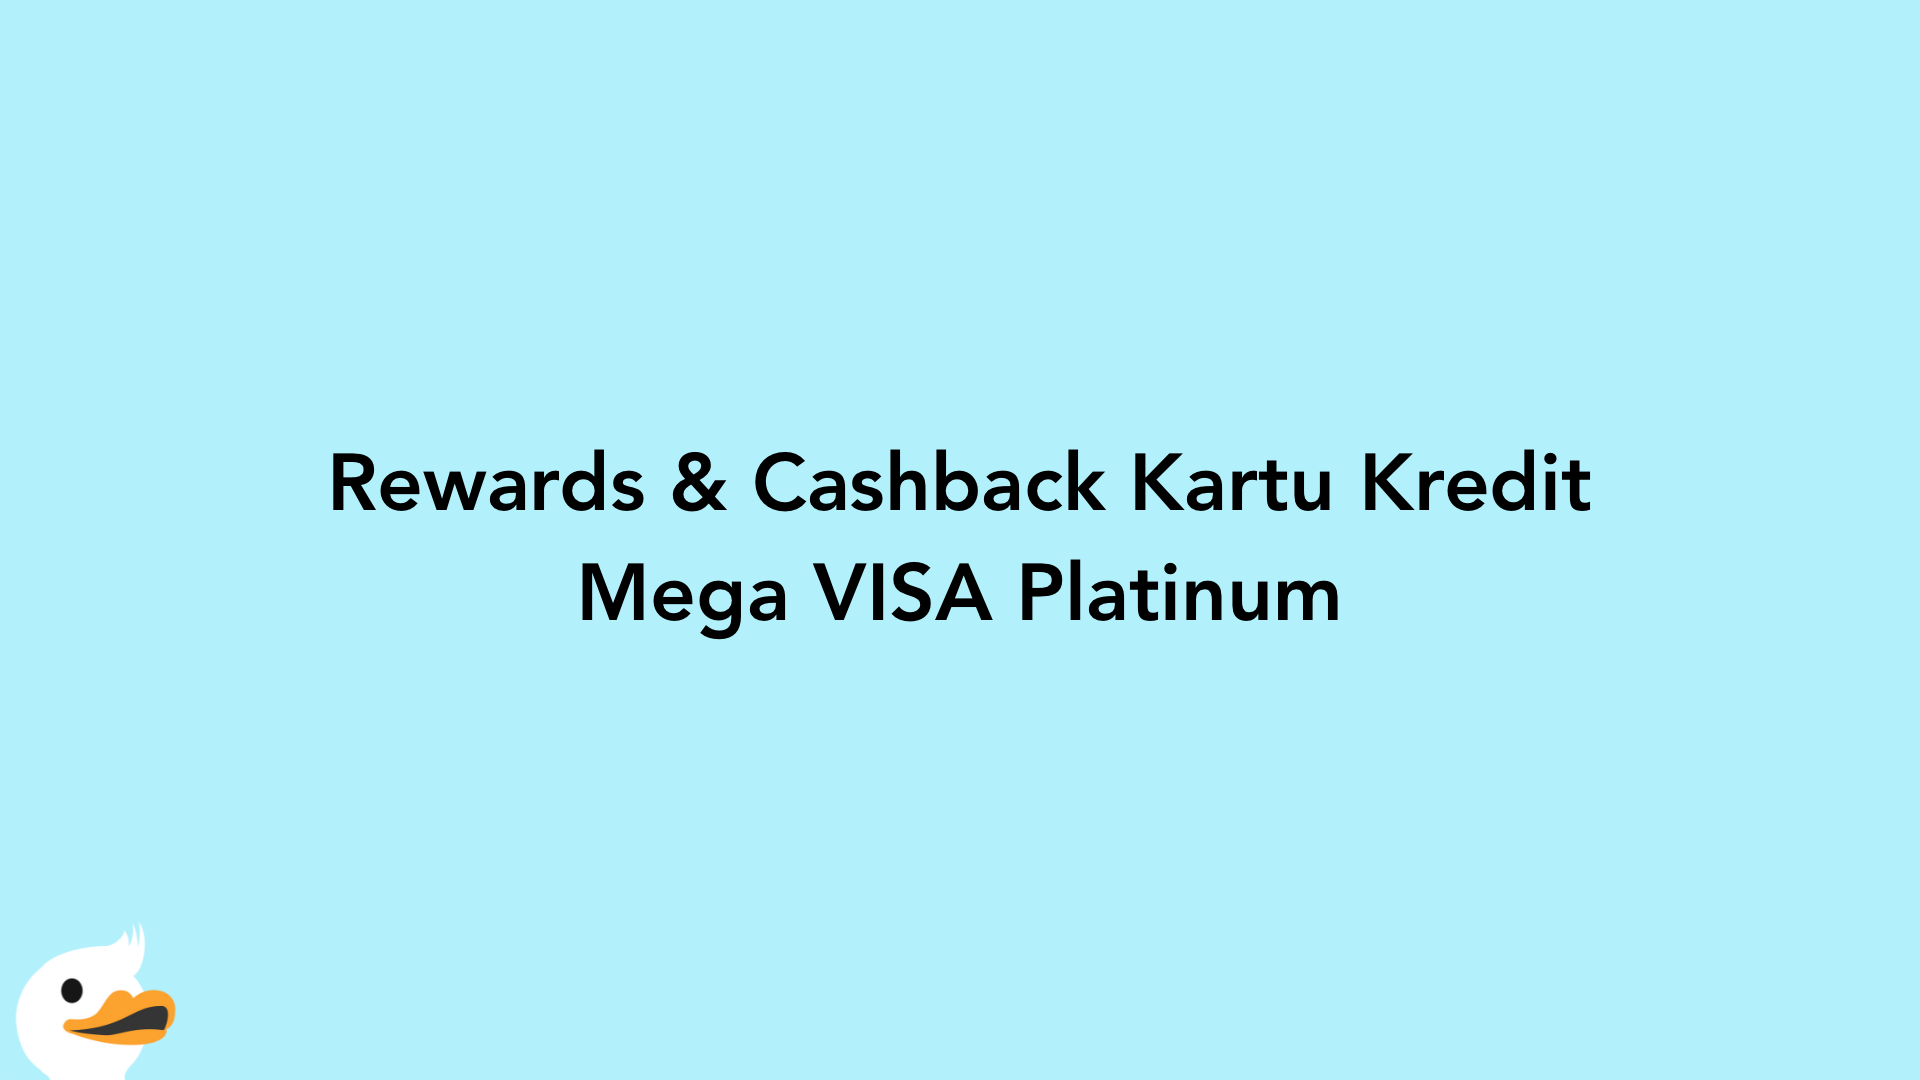 Rewards & Cashback Kartu Kredit Mega VISA Platinum